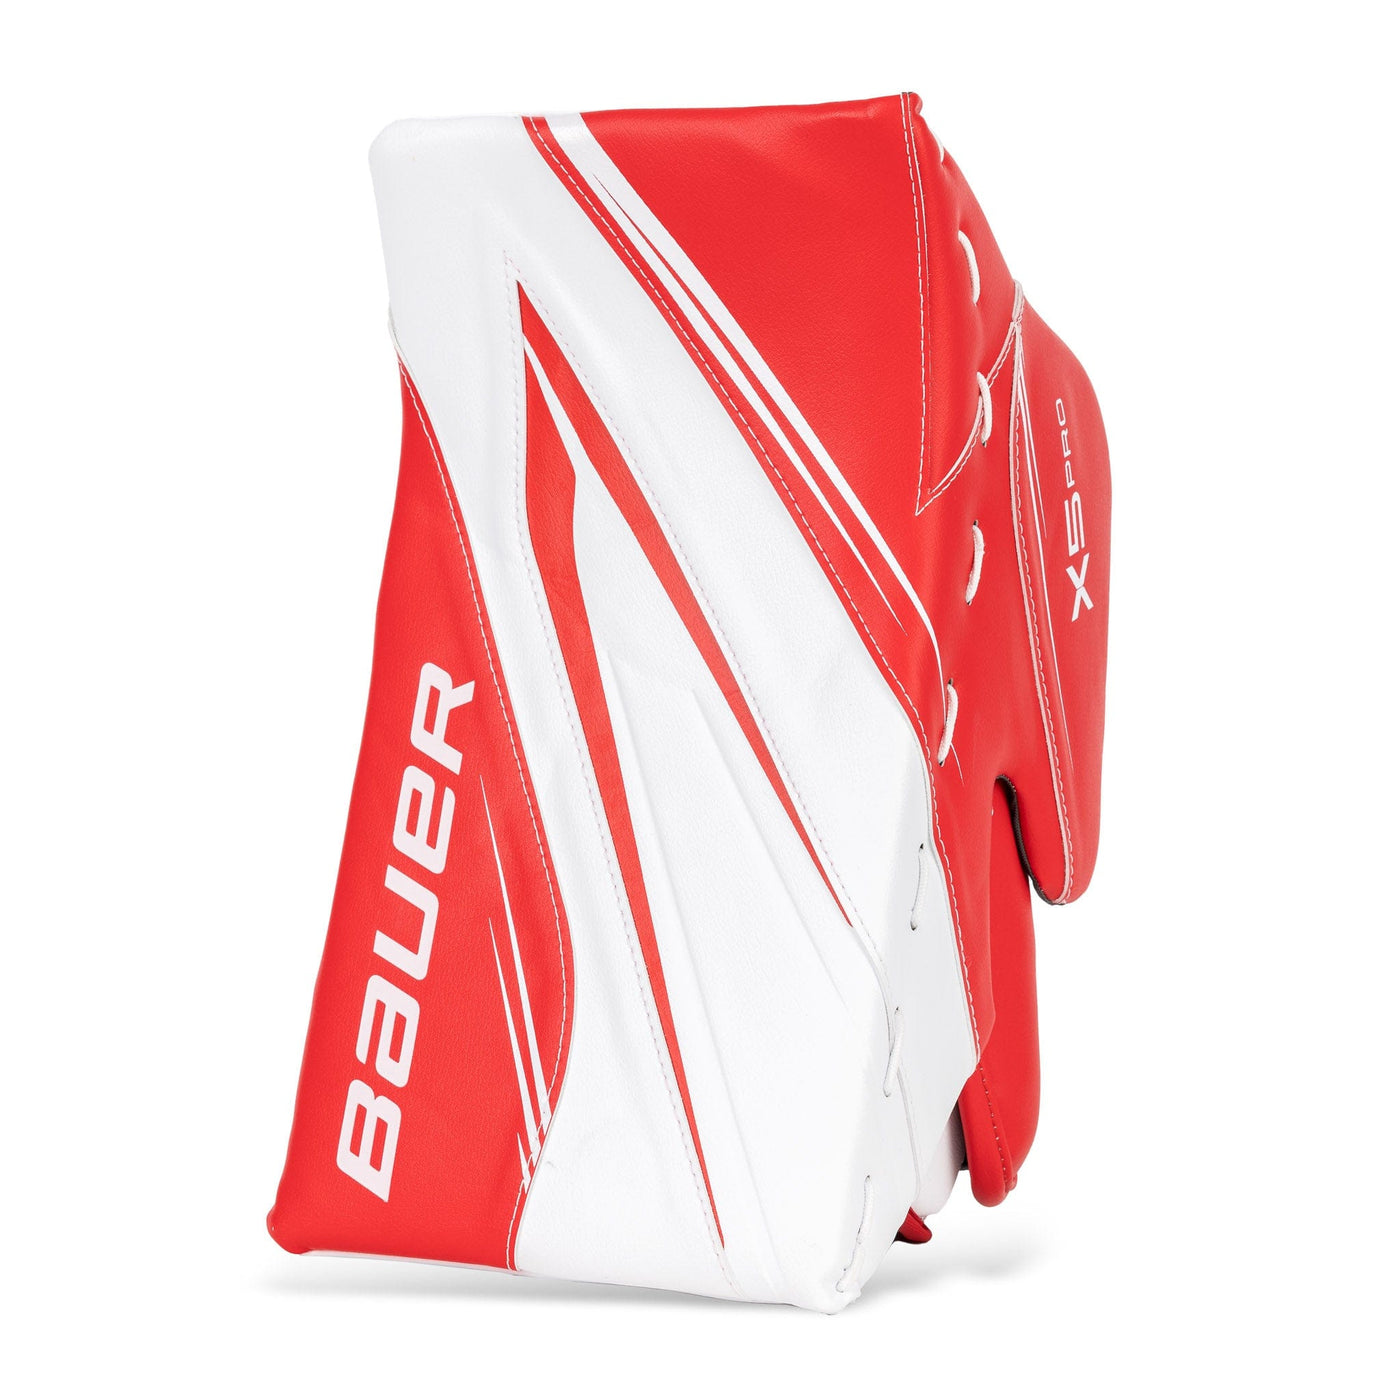 Bauer Vapor X5 Pro Senior Goalie Blocker - The Hockey Shop Source For Sports